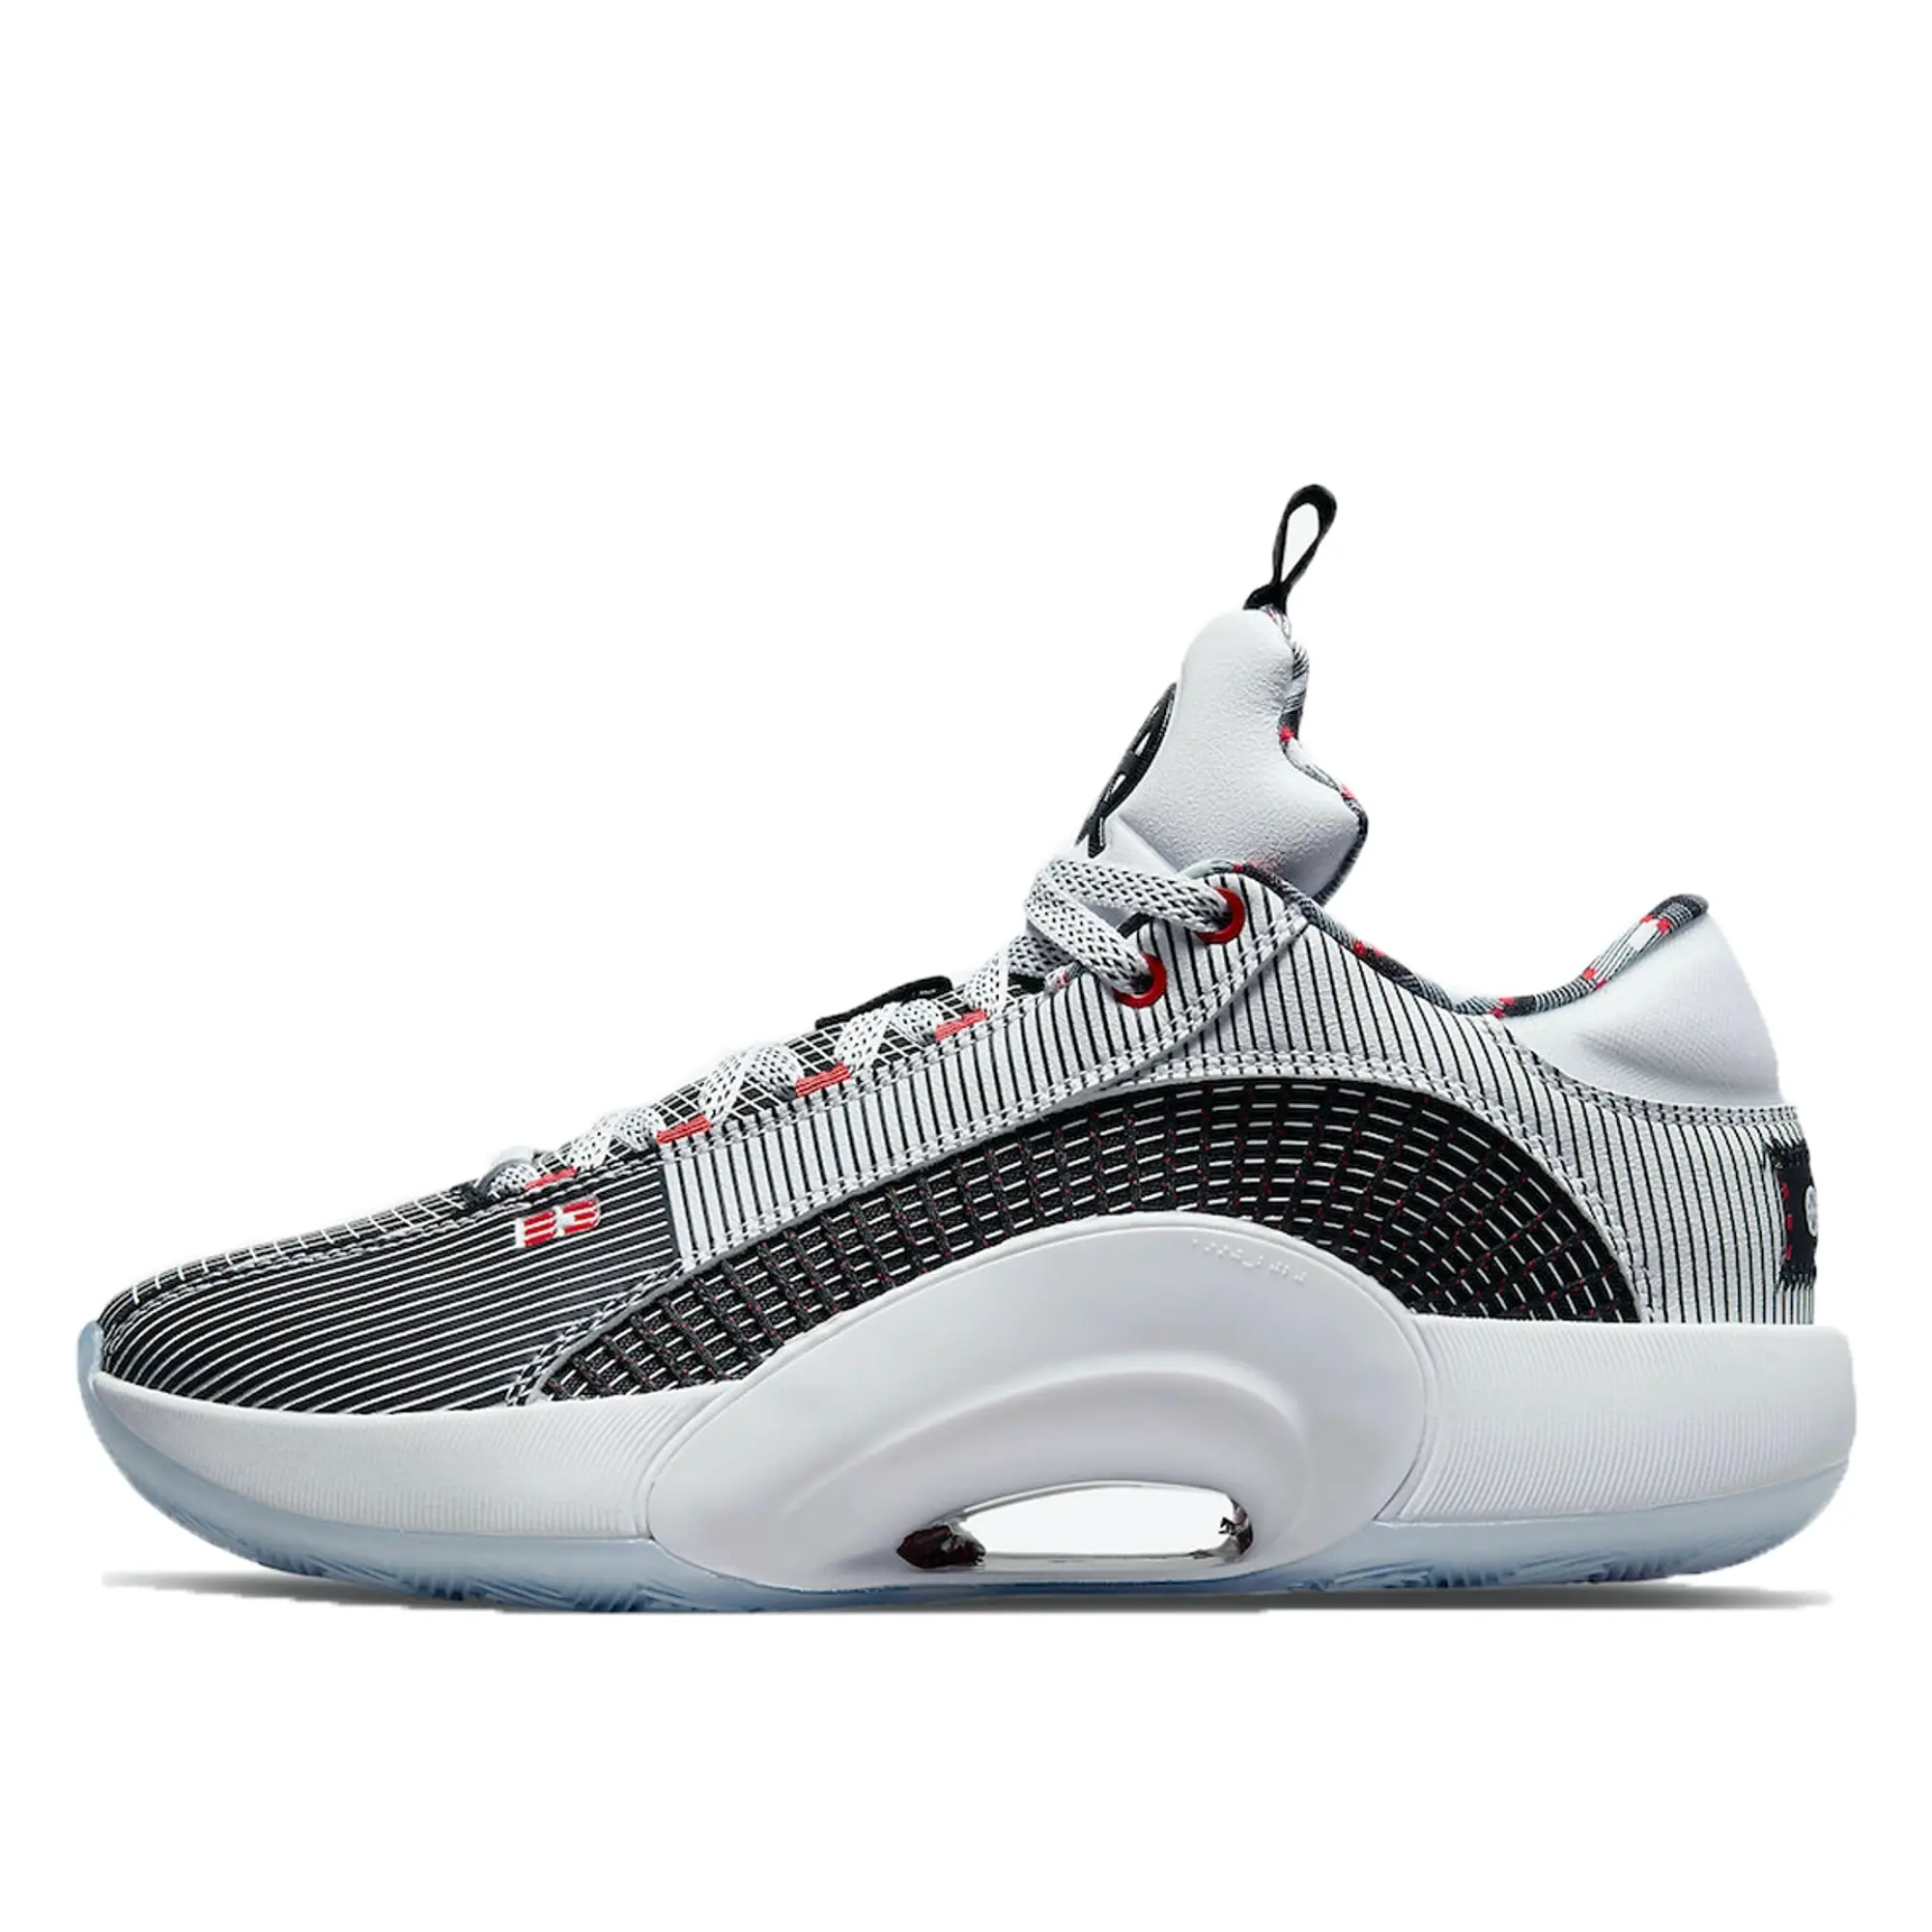 Nike Air Jordan 35 Low Quai 54